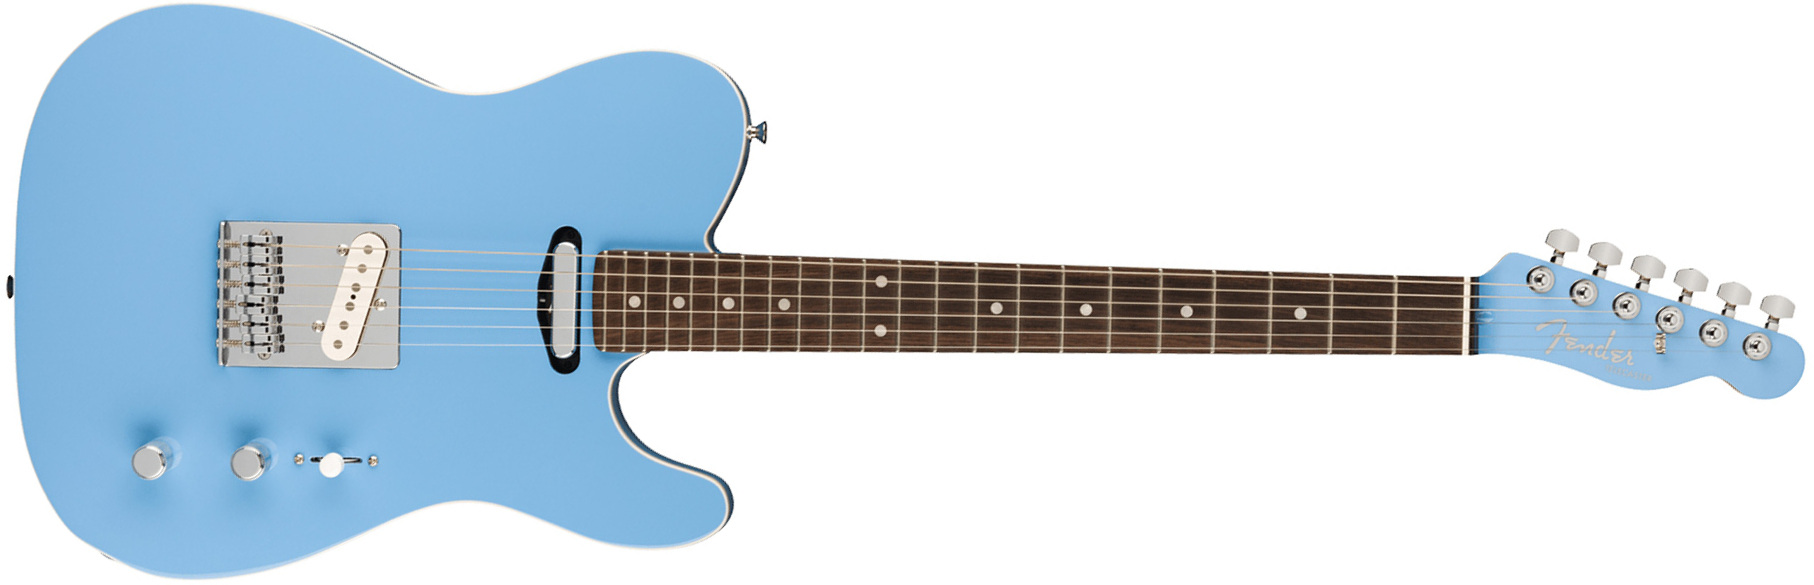 Fender Tele Aerodyne Special Jap 2s Ht Rw - California Blue - Televorm elektrische gitaar - Main picture